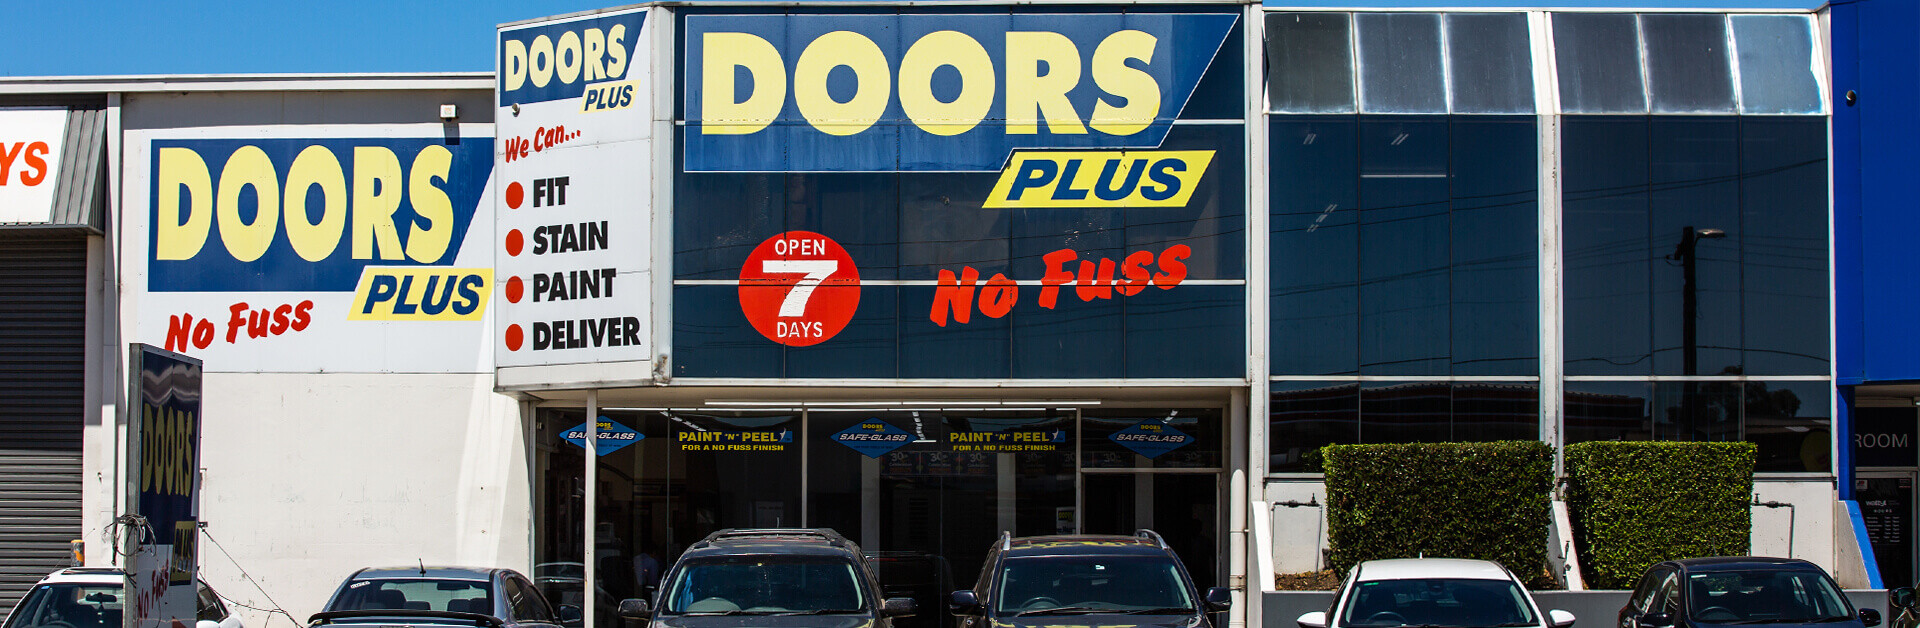 Doors Plus Granville Showroom in Sydney, NSW outside view